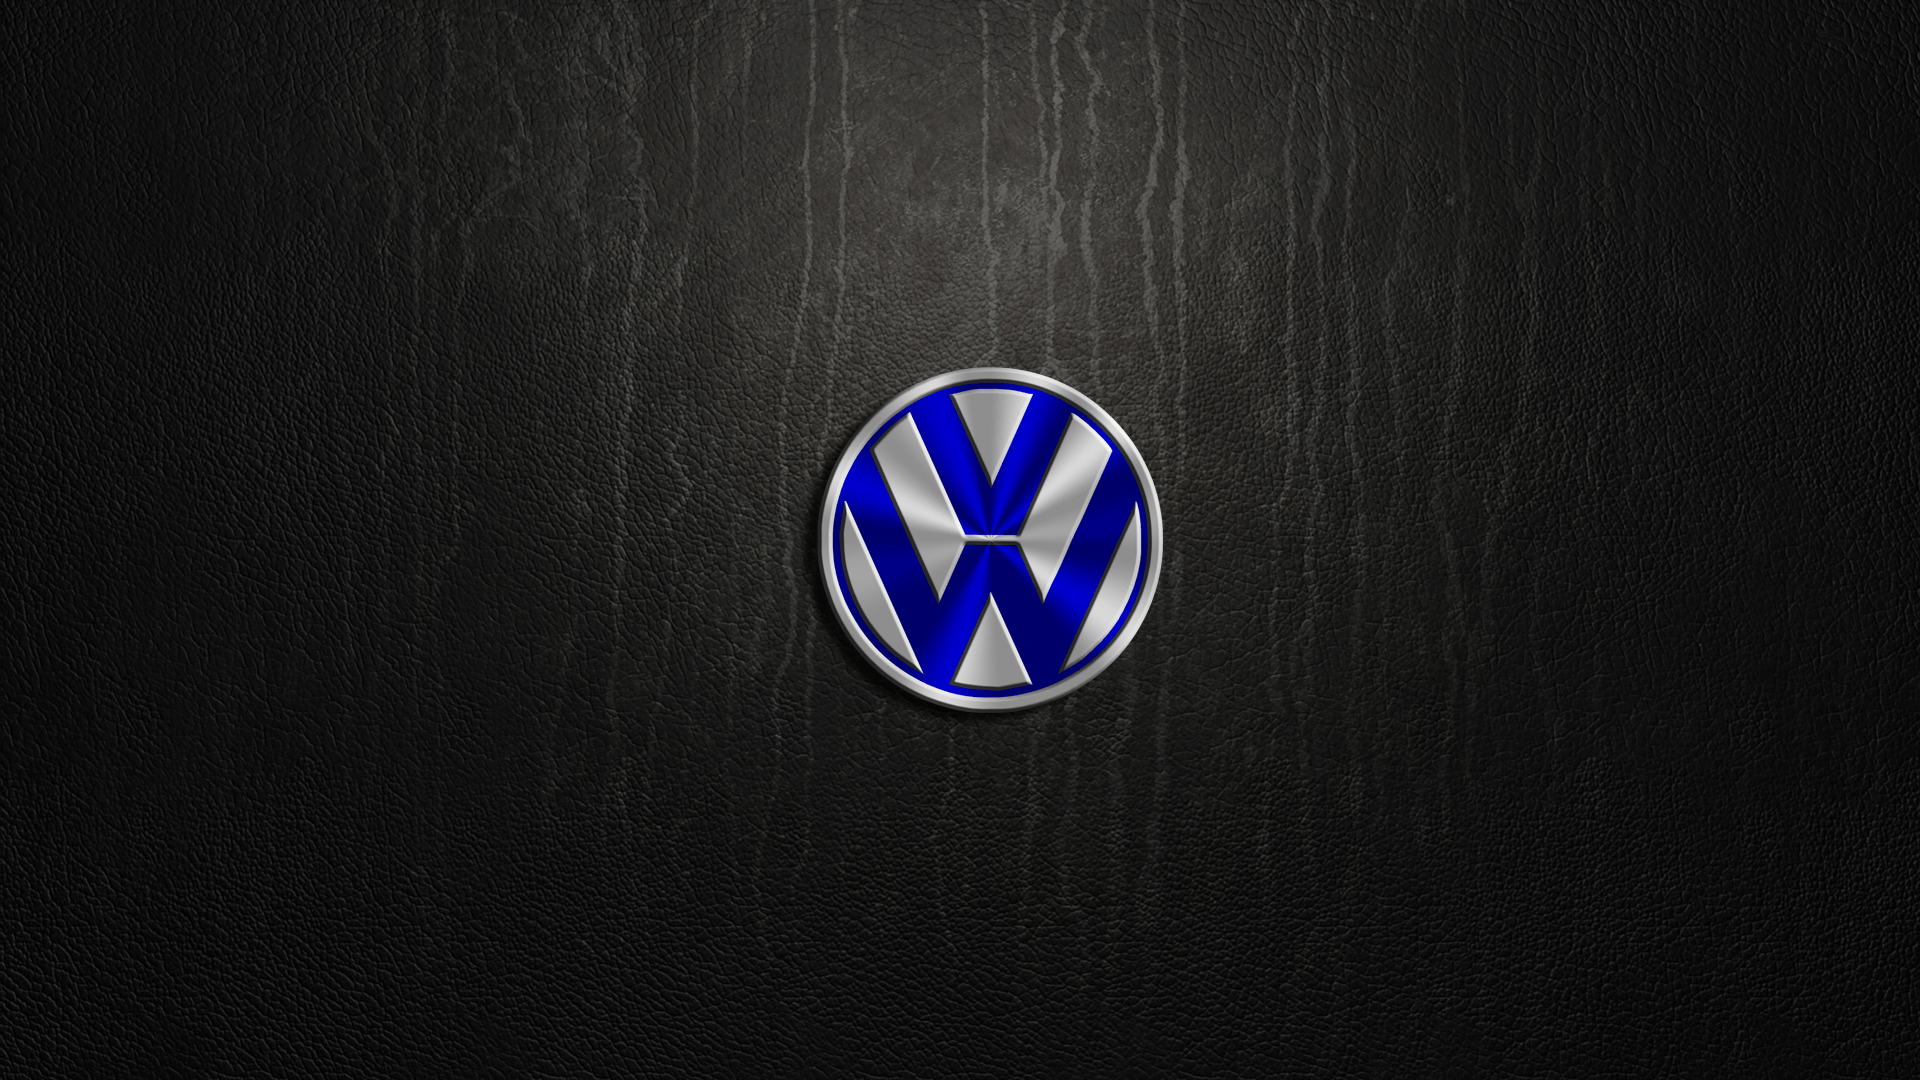 Volkswagen HD Wallpaper and Background Image